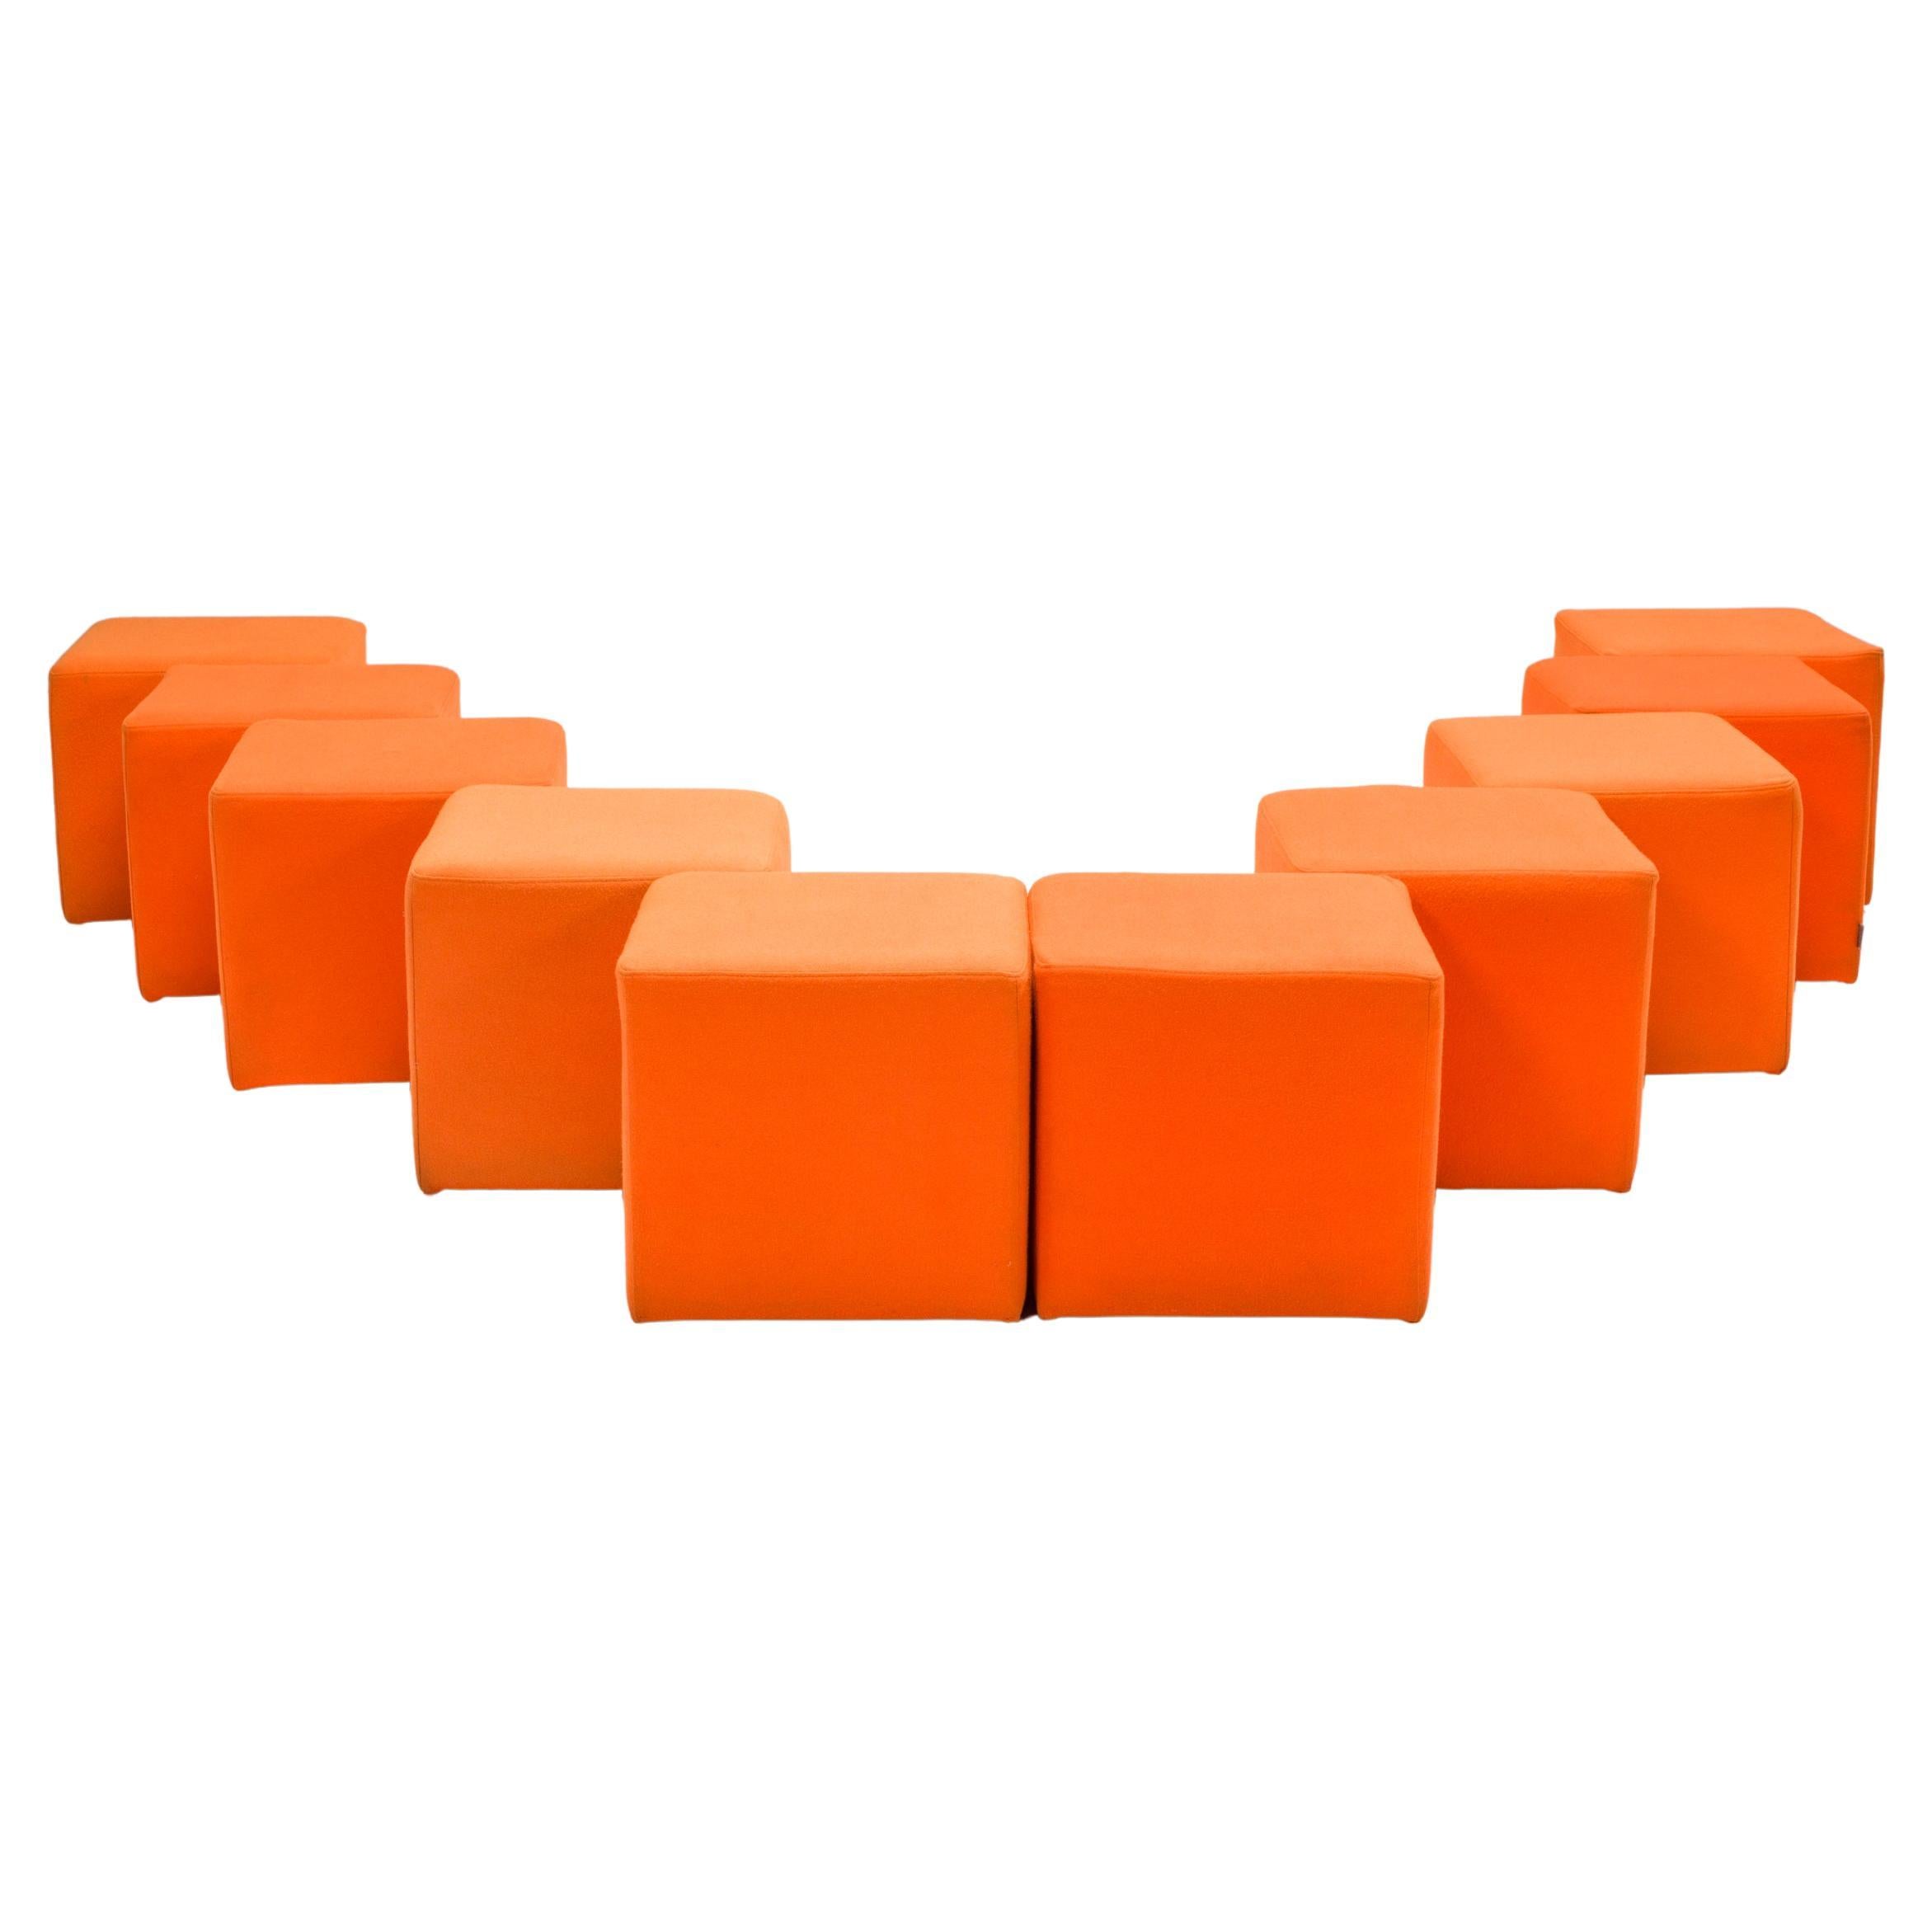 SITS Furniture Square Orange Fabric Small Stools, Set of 10